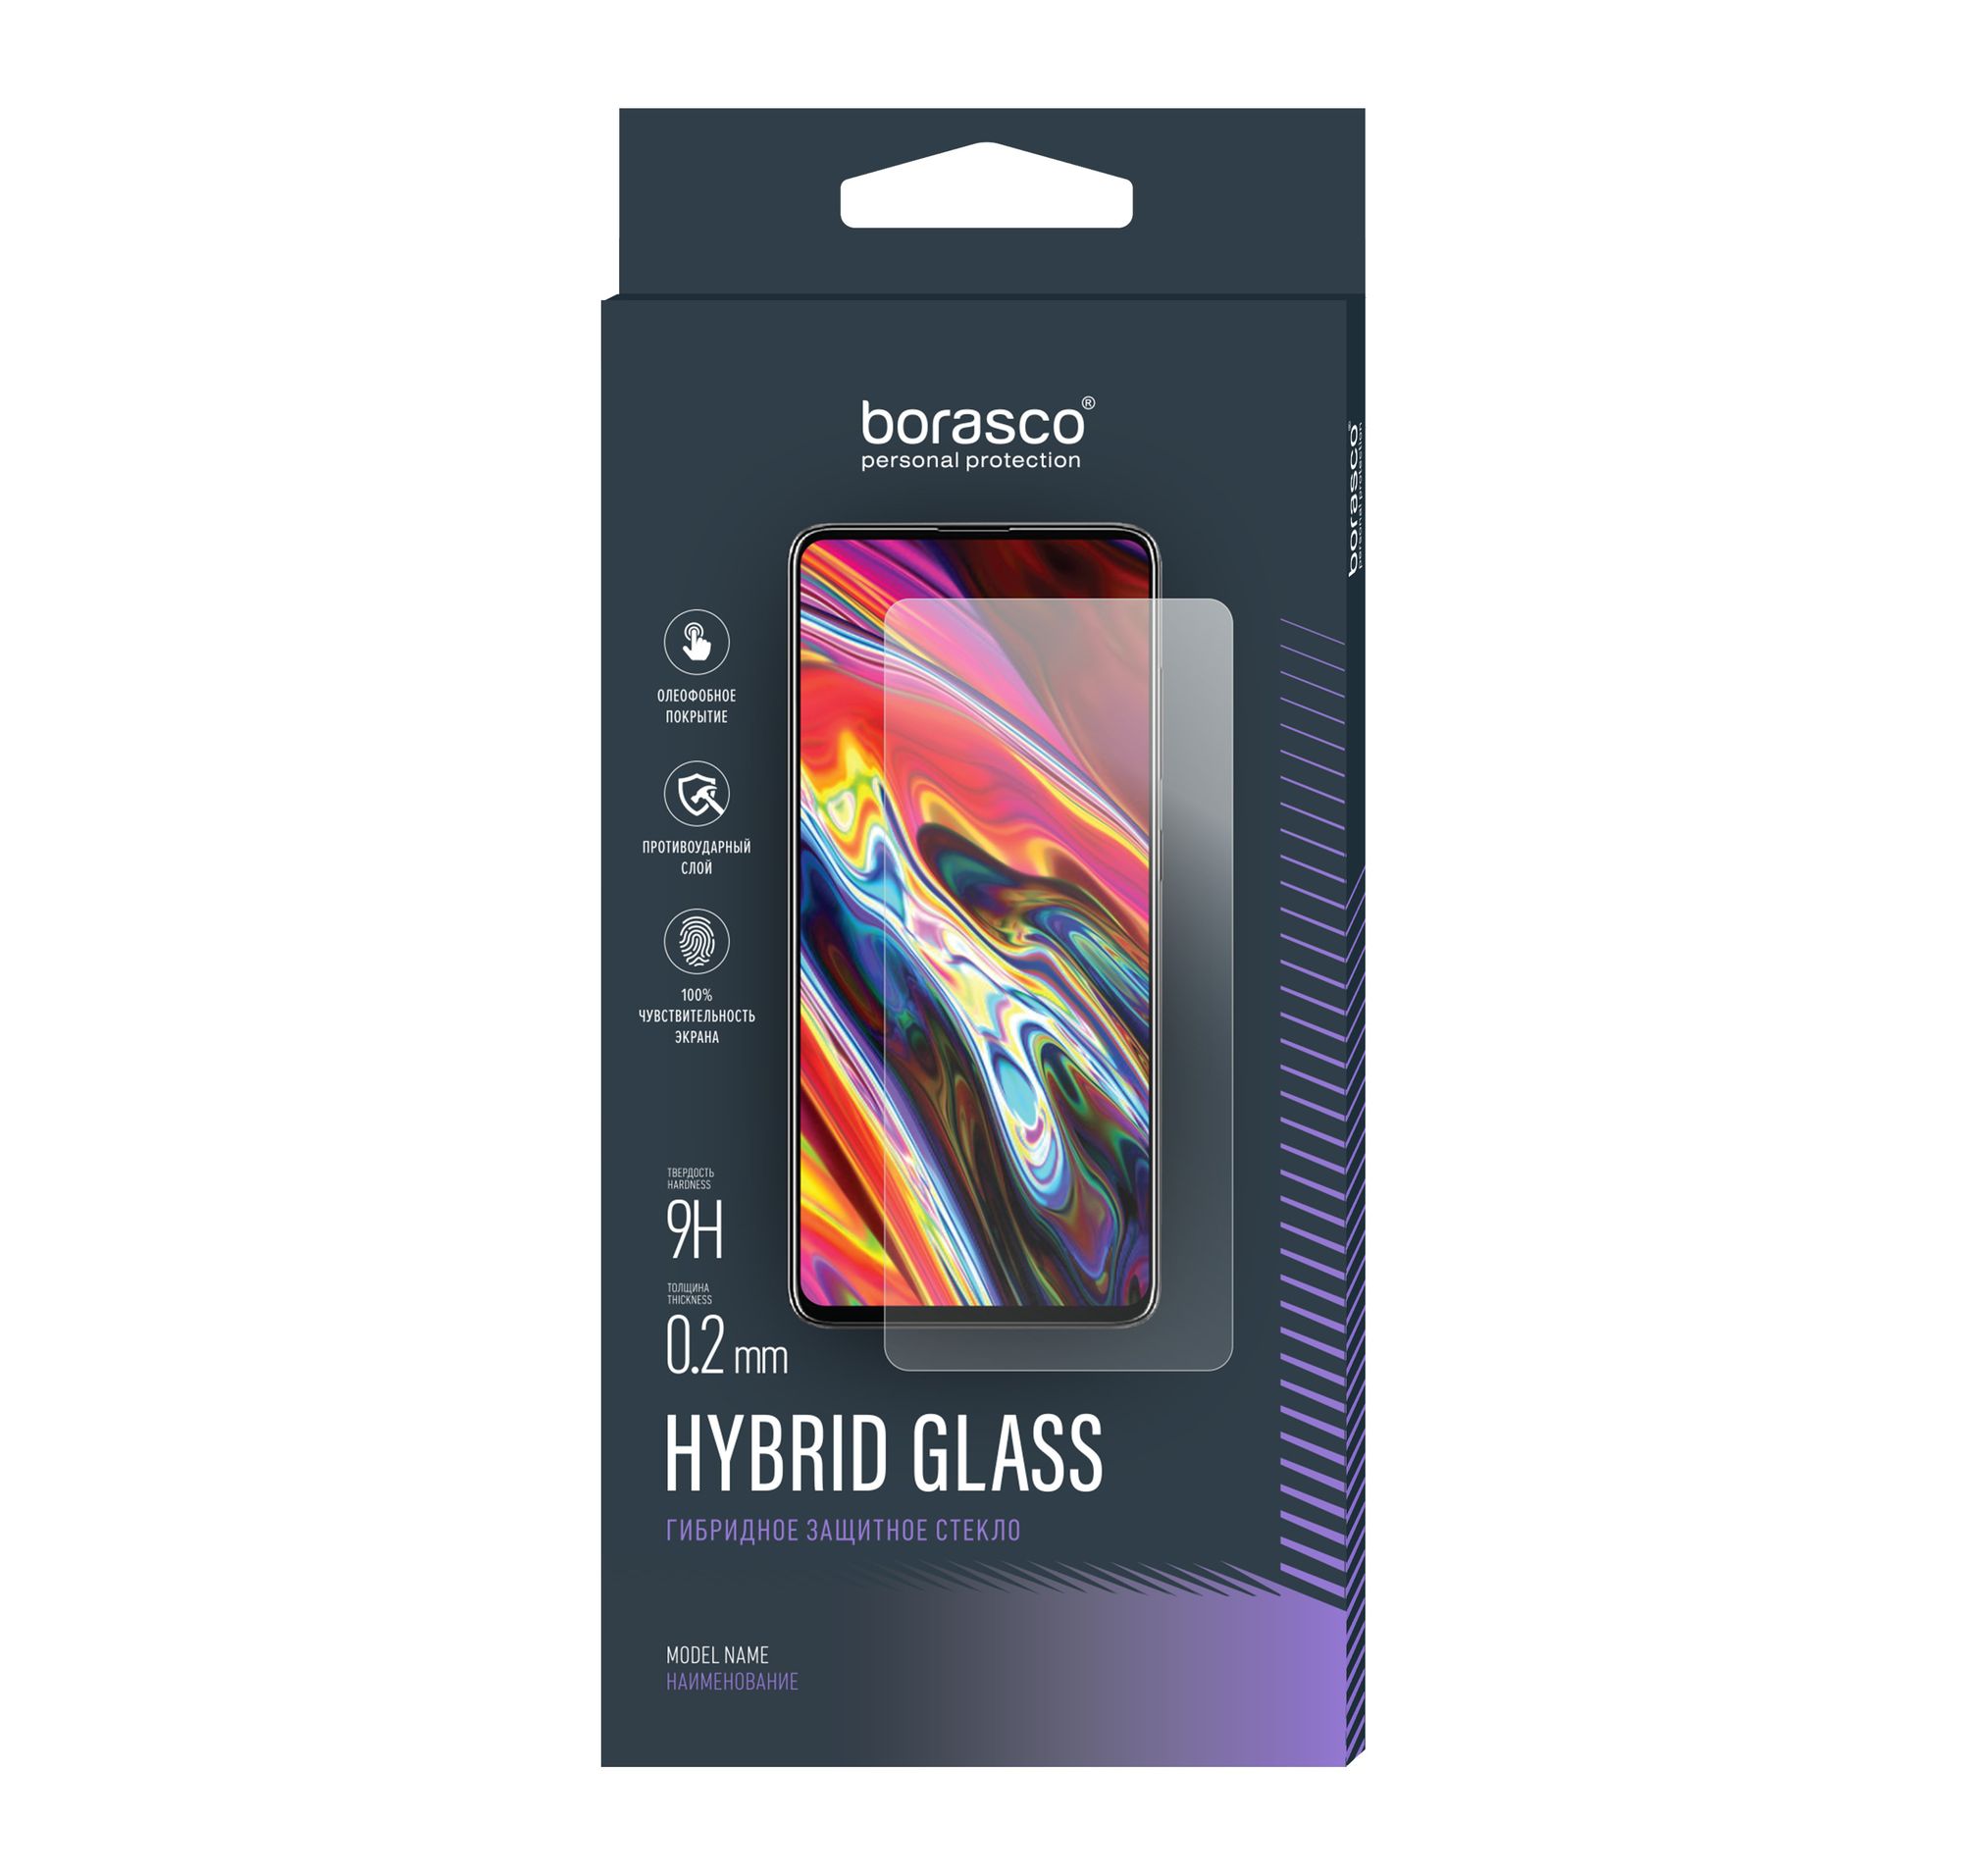 Стекло защитное Hybrid Glass VSP 0,26 мм для OPPO RENO Z силиконовый чехол на oppo reno z жуки для оппо рено зет